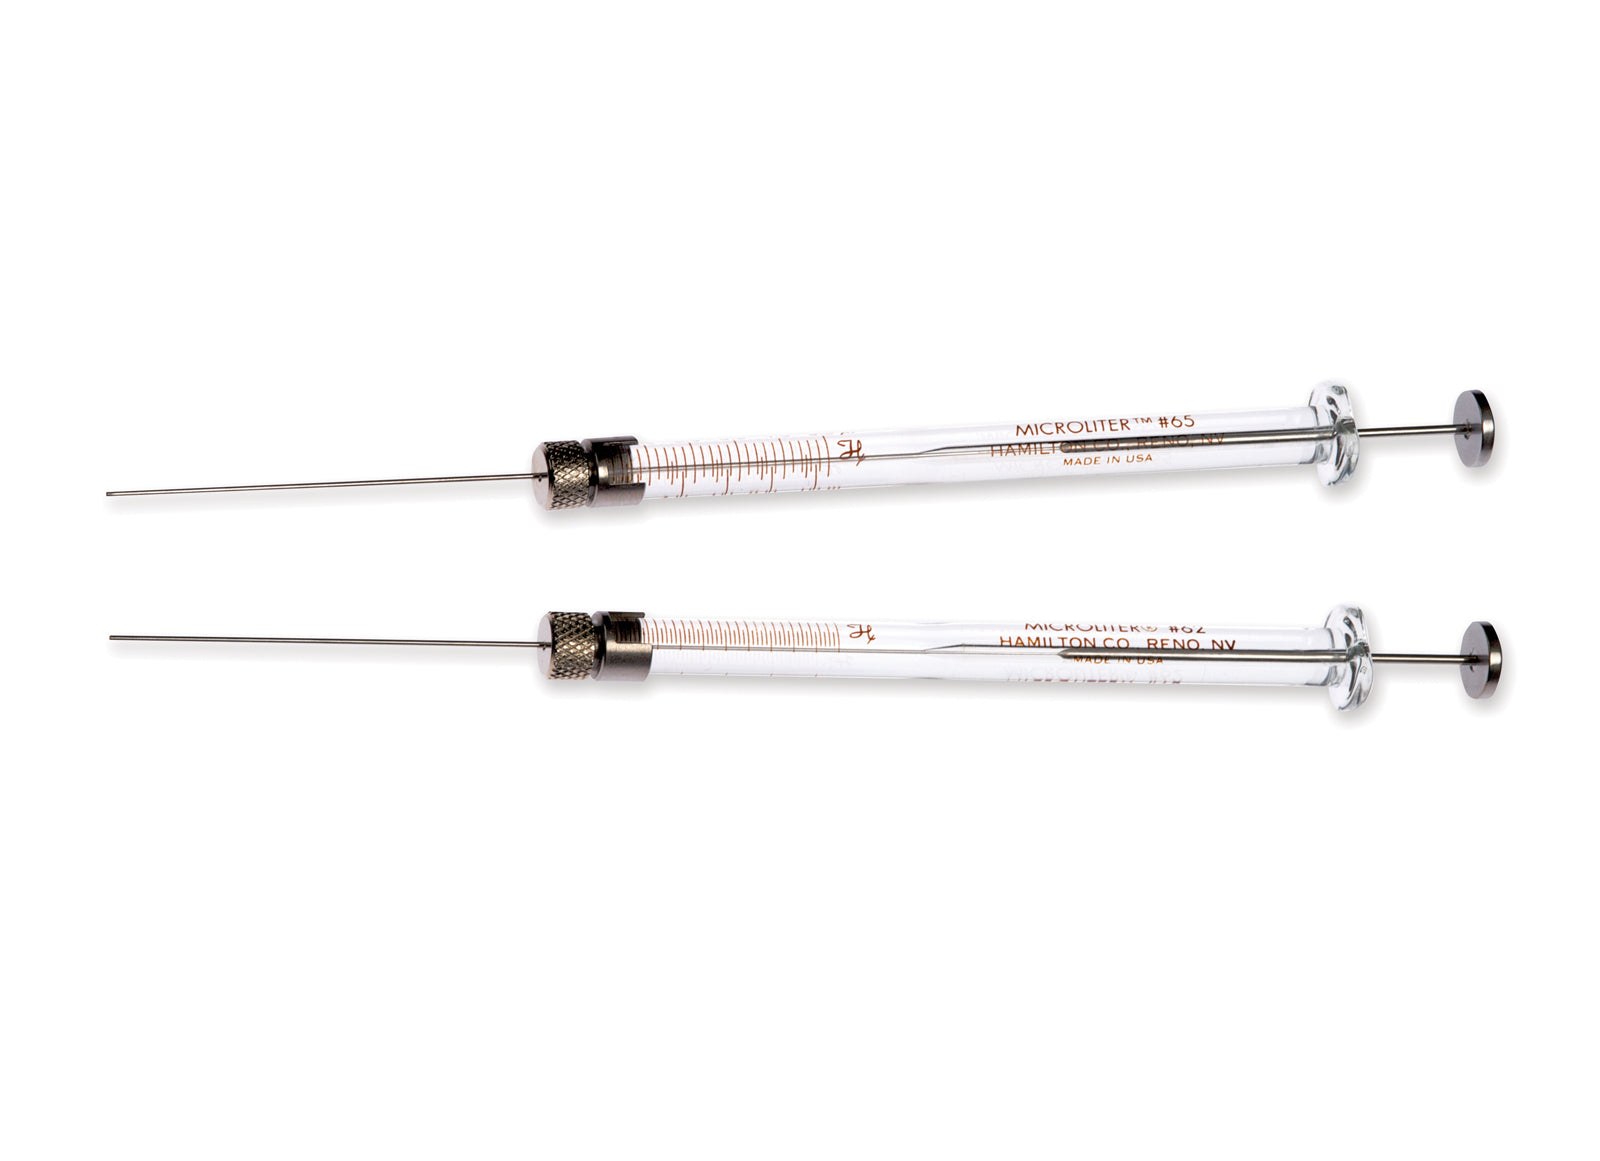 Hamilton Company 600 Series Microliter Syringes